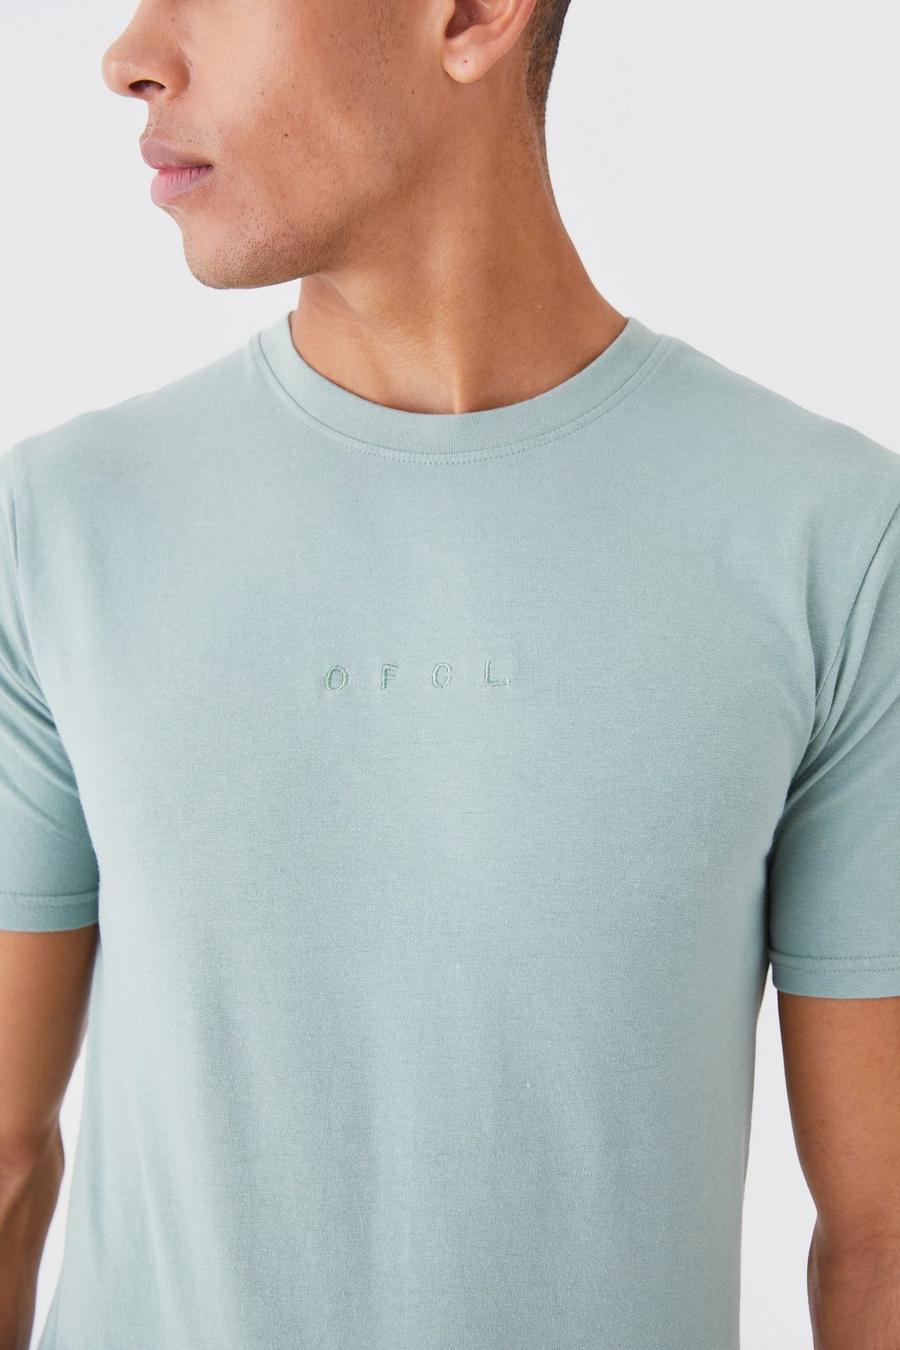 T-shirt attillata Ofcl slavata a girocollo, Sage image number 1